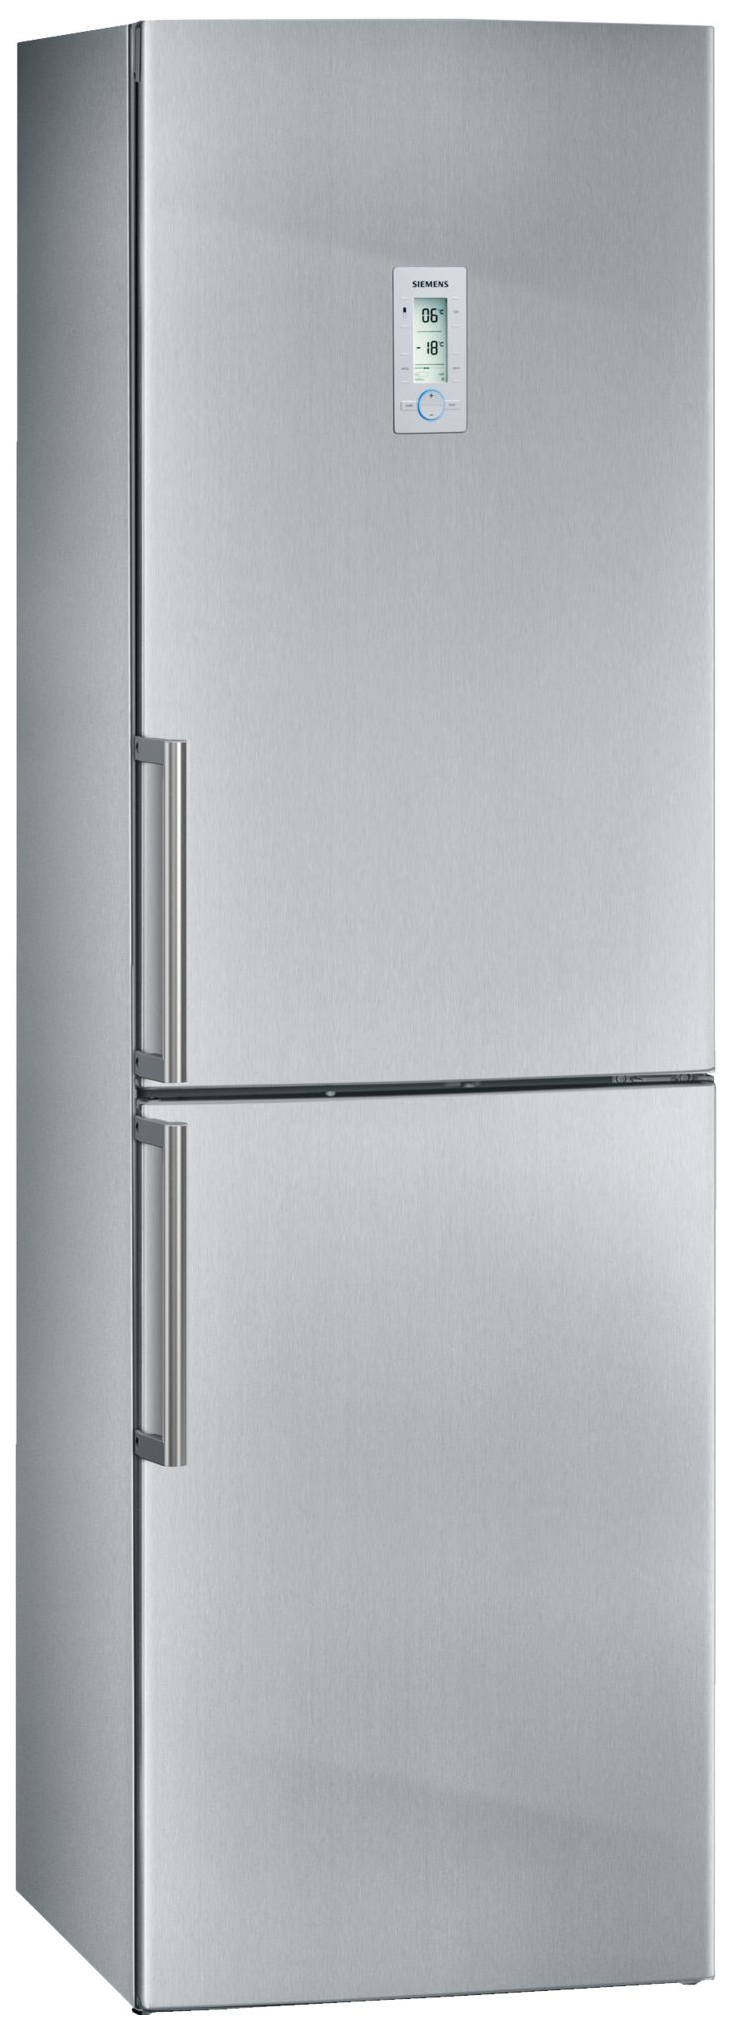 Холодильник Siemens KG39NAI26R серебристый холодильник siemens kg39nai26r серебристый